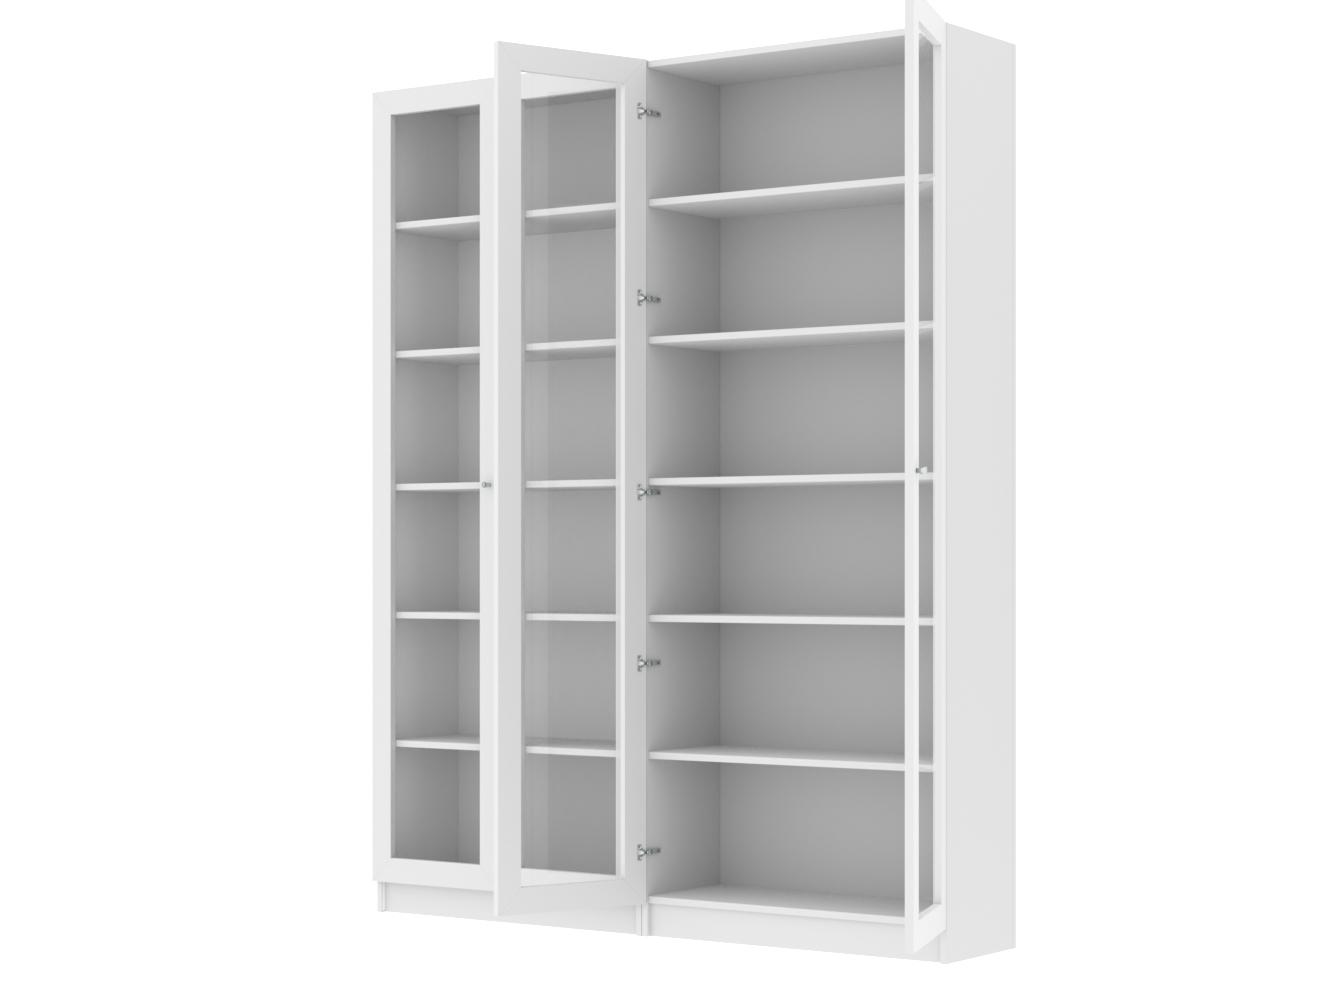  Книжный шкаф Билли 344 white ИКЕА (IKEA) изображение товара